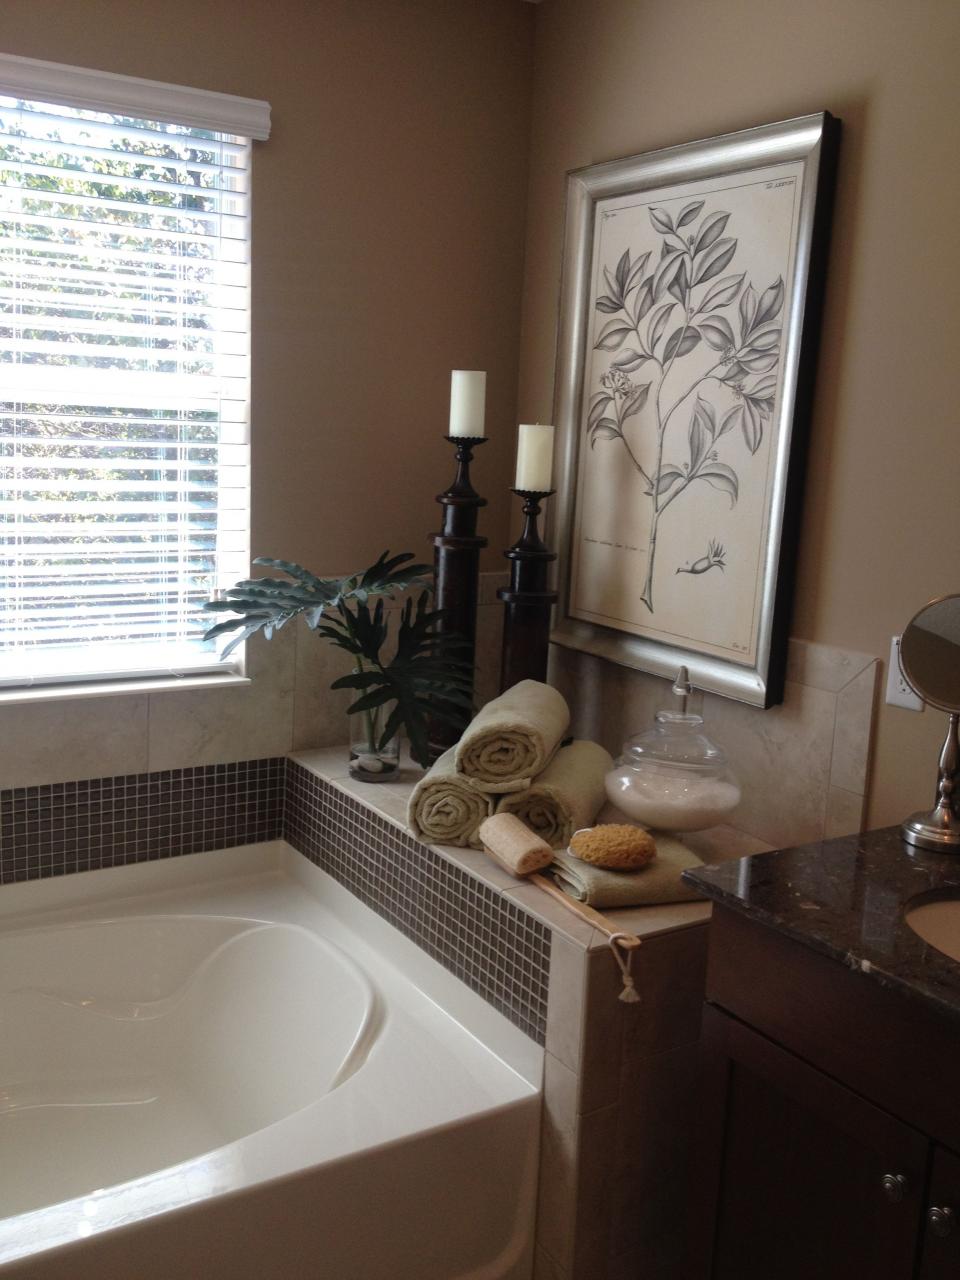 Best 25+ Bath tub decor ideas ideas on Pinterest Diy bathroom decor